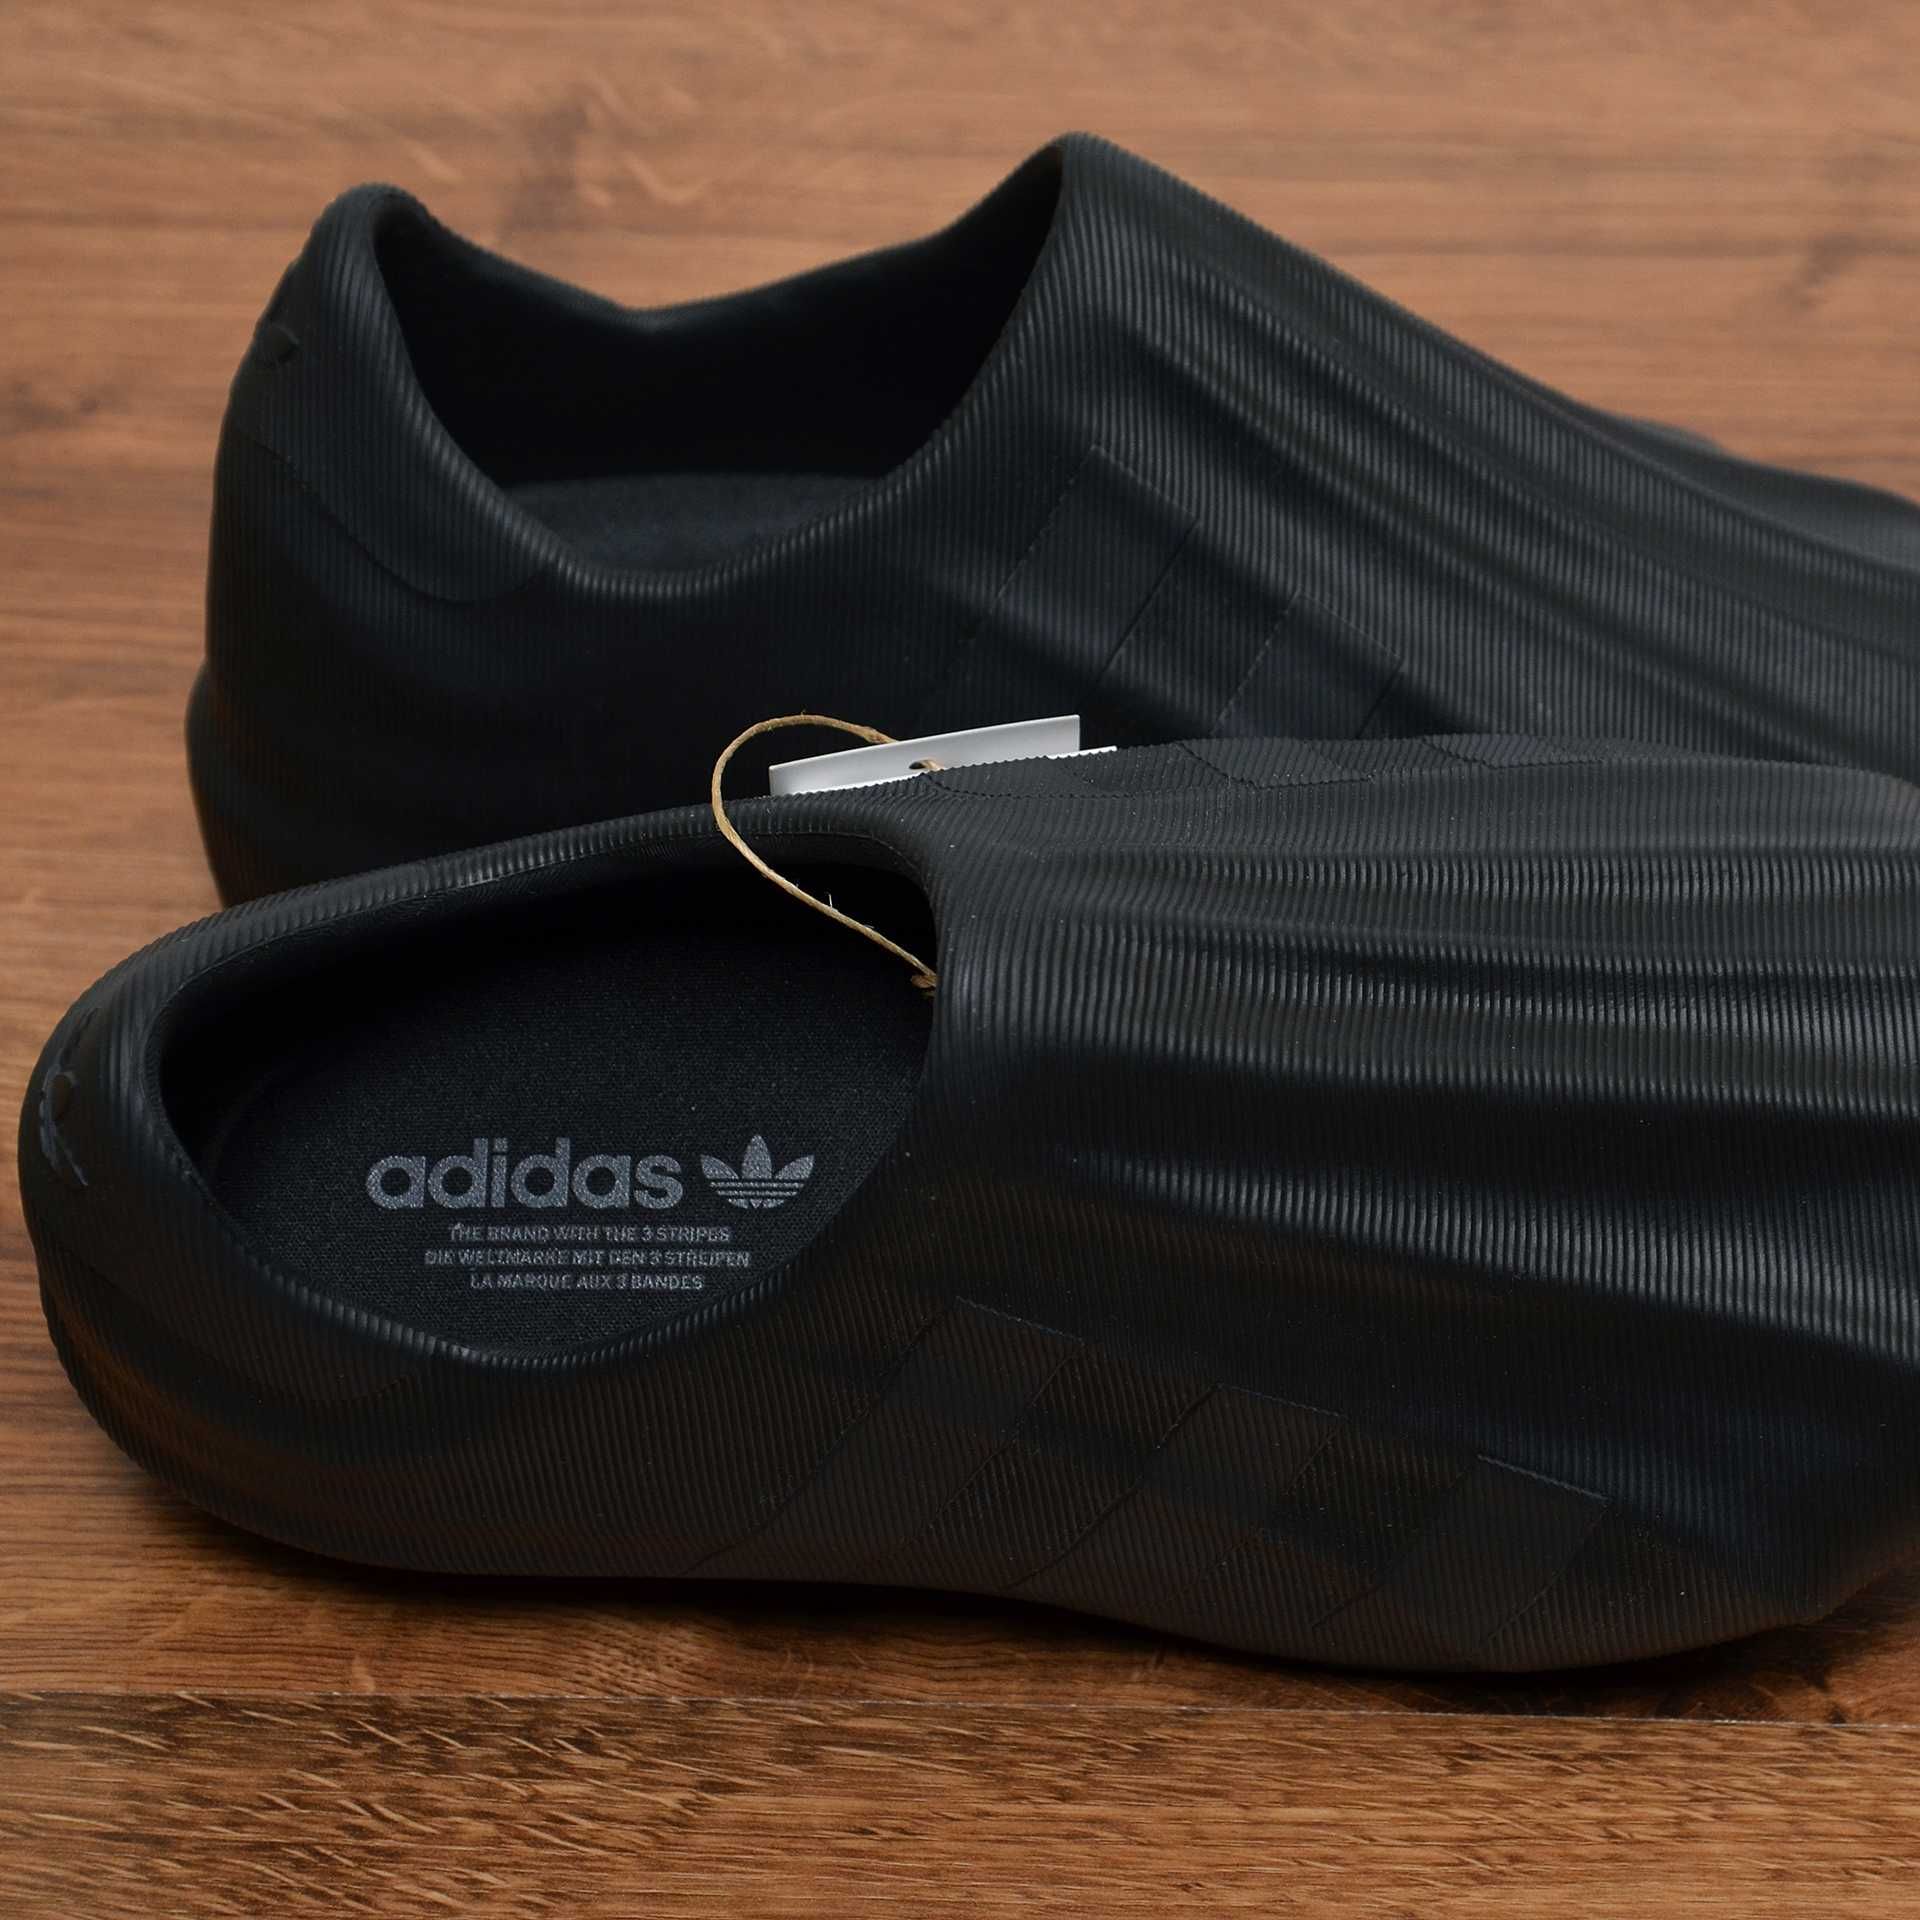 Adidas Originals AdiFOM Superstar Core Black оригинал 38.5 / 24см